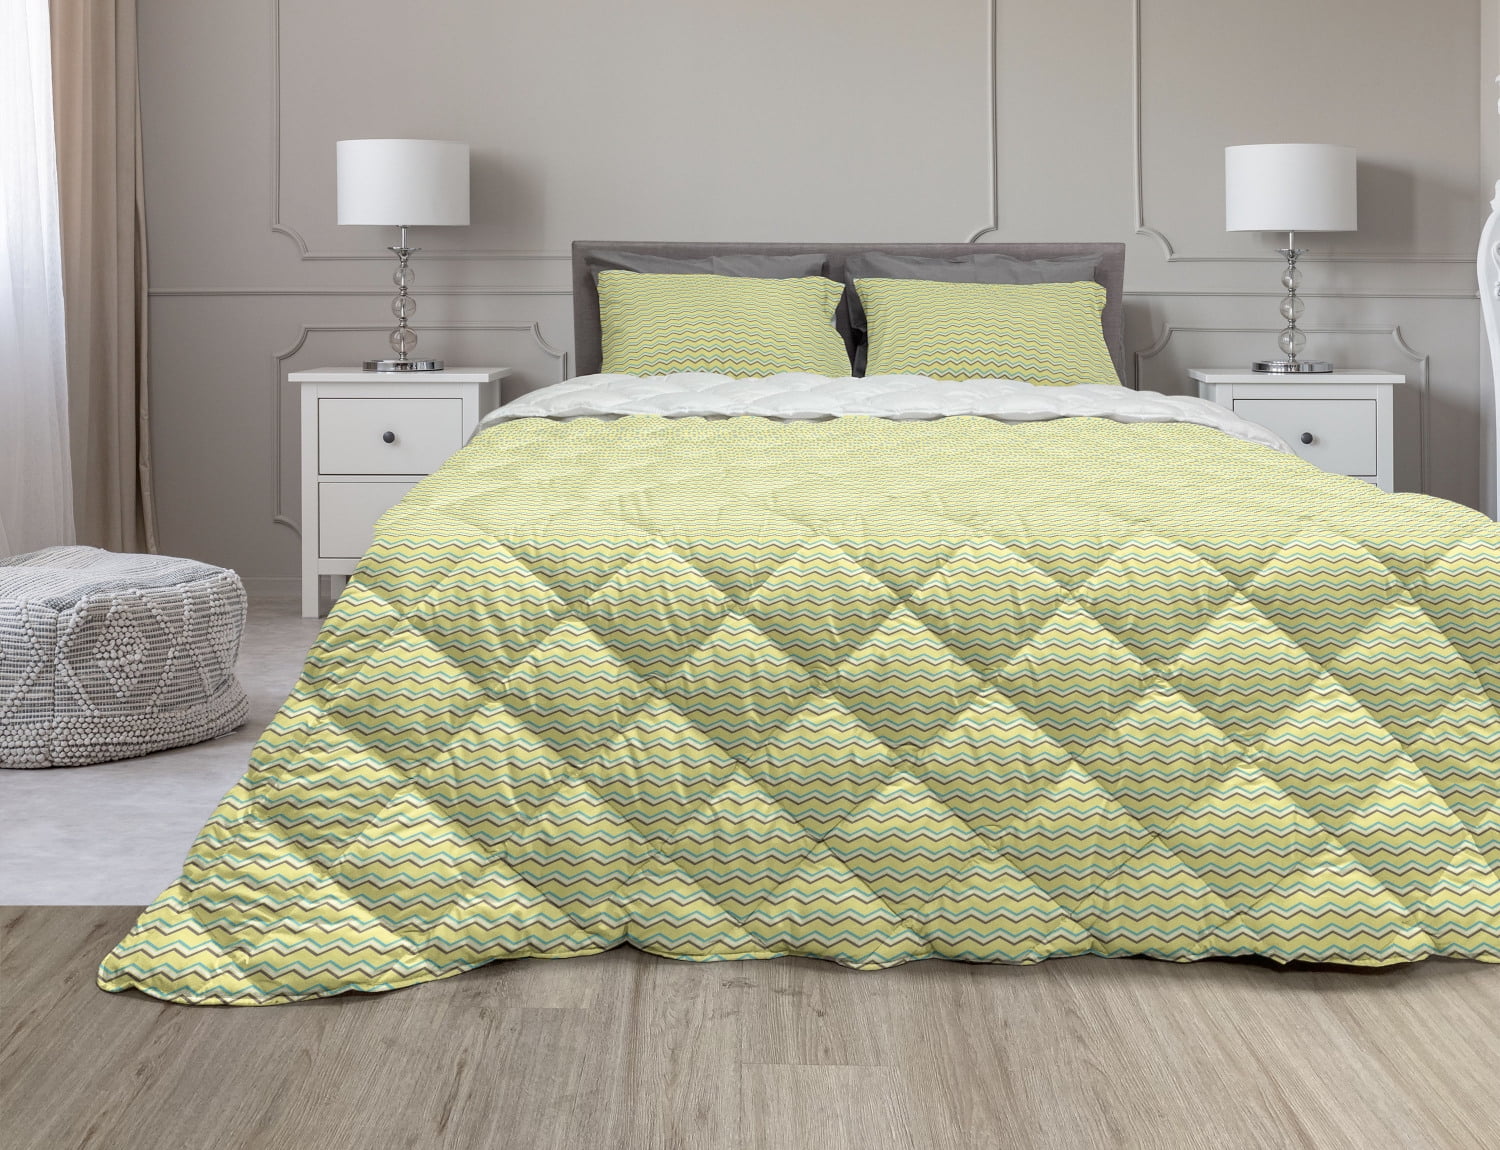 Gray Grey Yellow Chevron Zig Zag 3 pc Comforter Set Twin XL Full Queen King Bed 